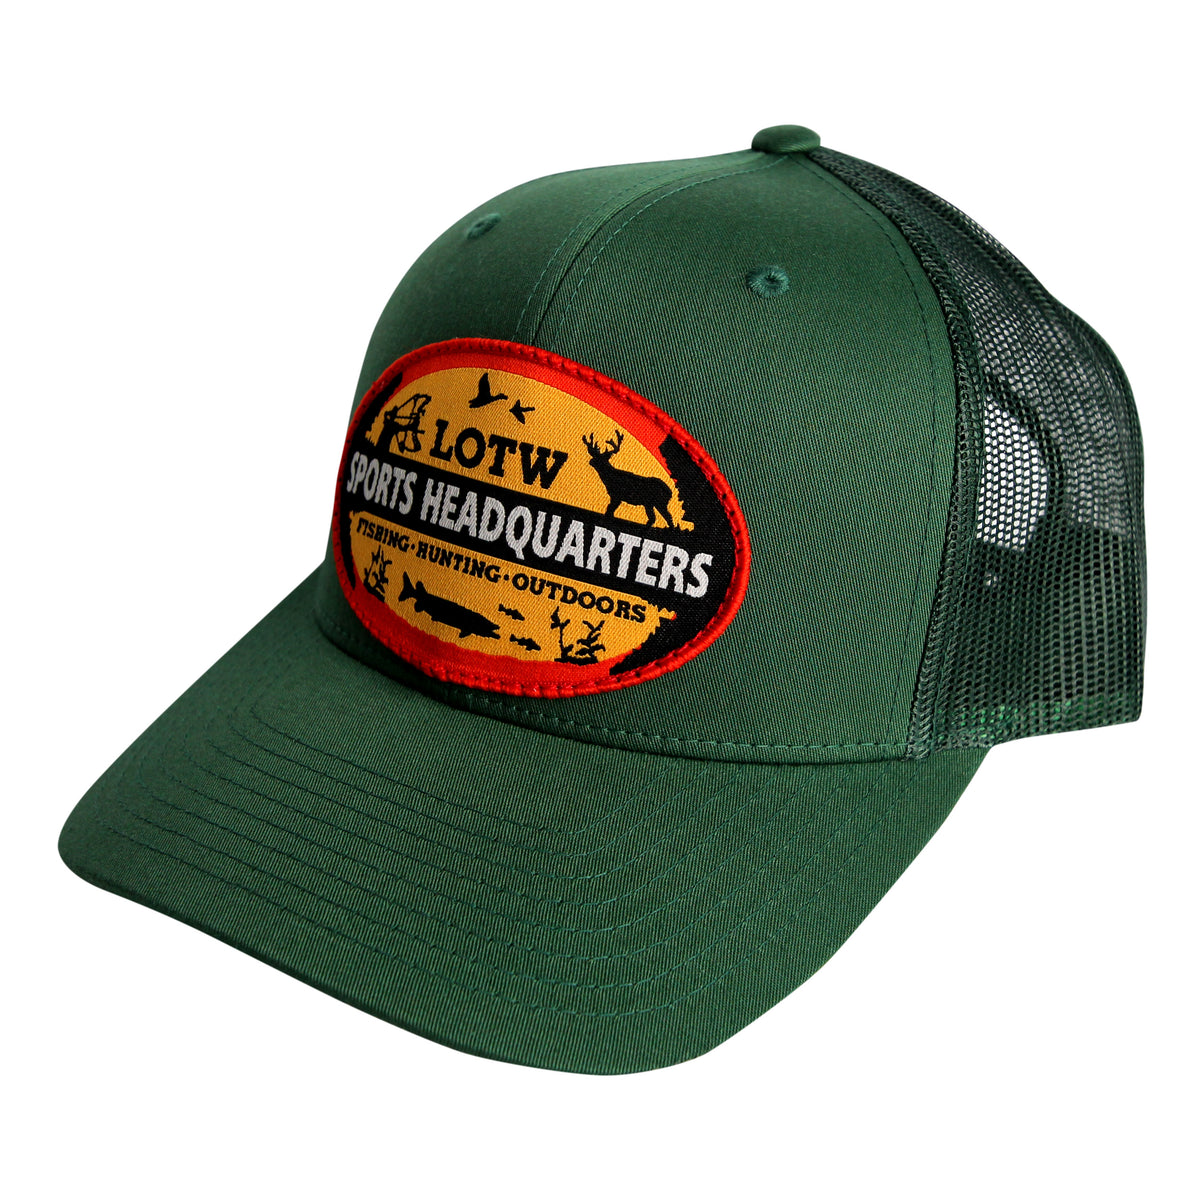 LOTW Sports Headquarters Retro Snapback Trucker Hats - Evergreen